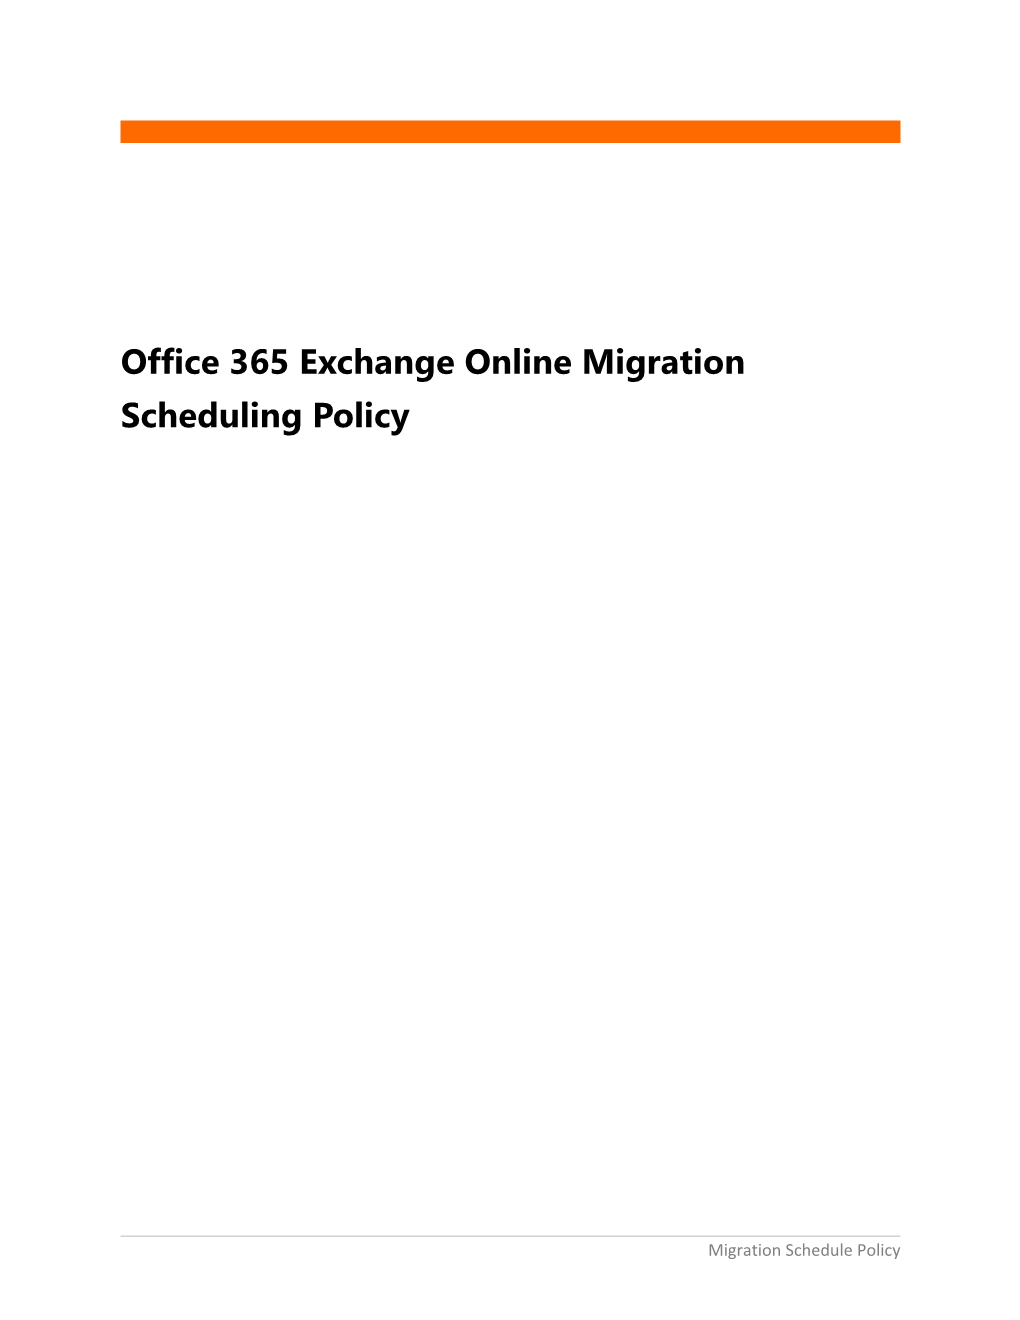 Office 365 Exchange Online Migration Scheduling Policy